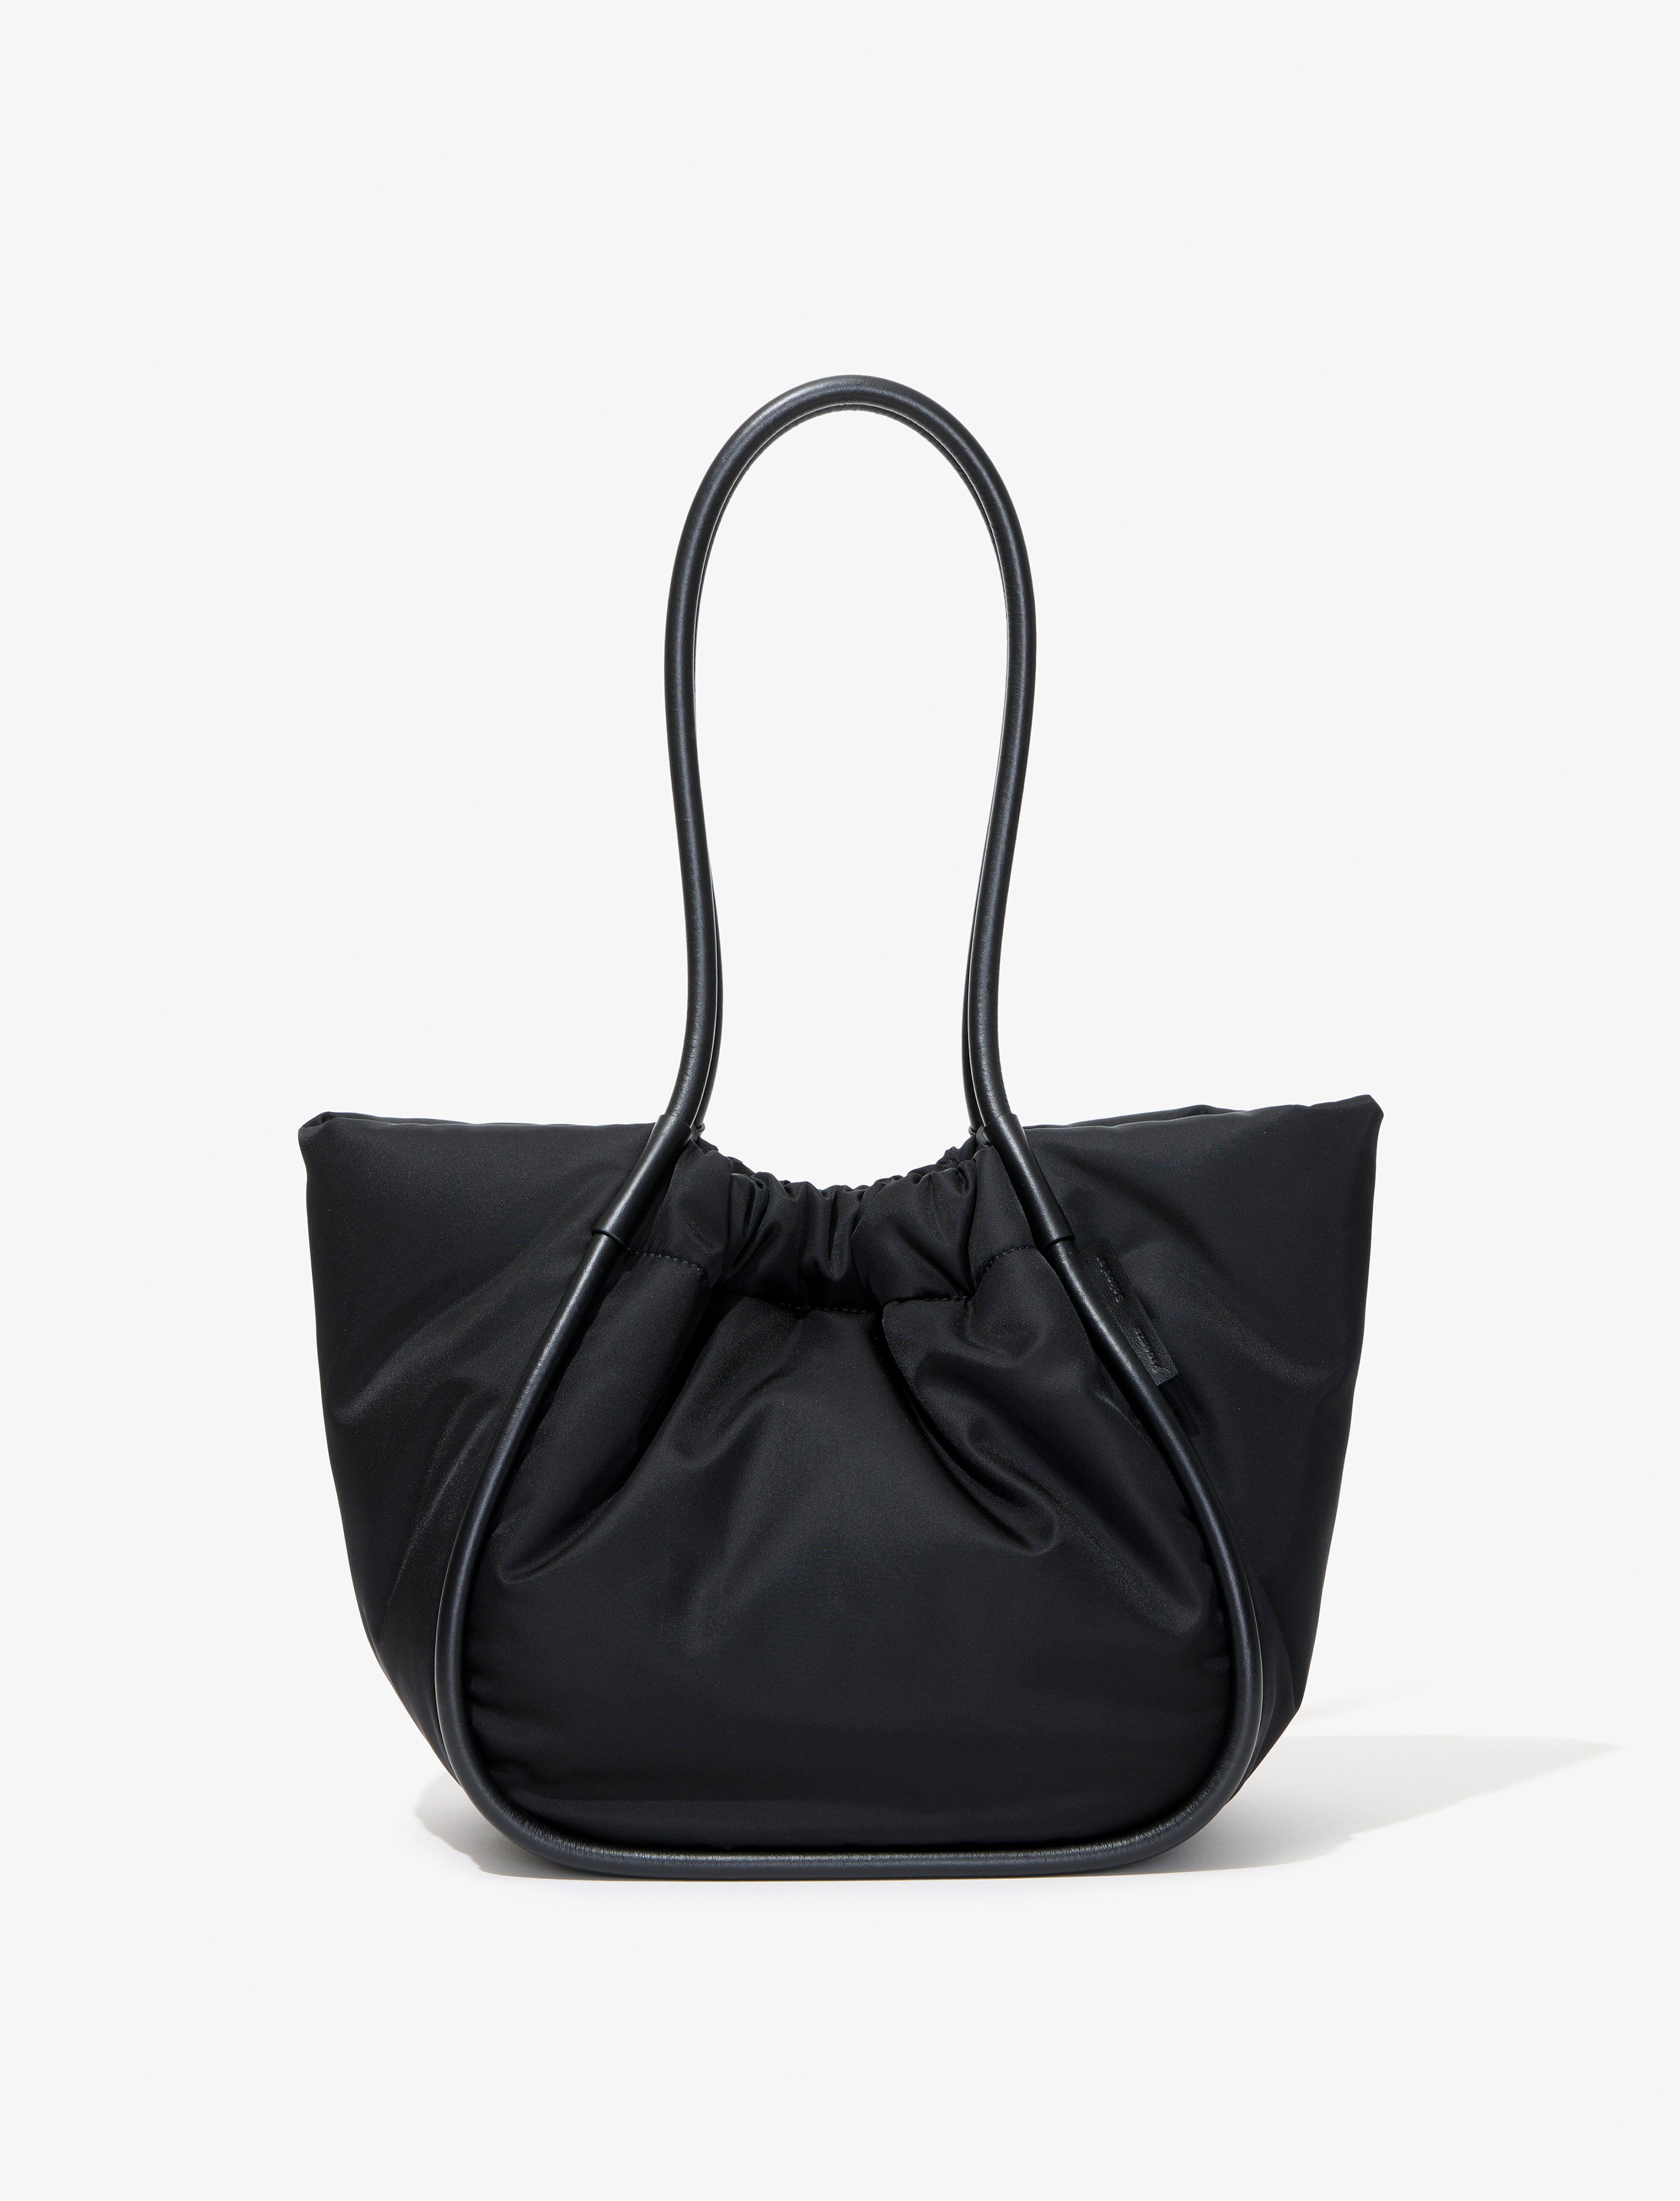 Shop Tote Bags | Proenza Schouler - Official Site